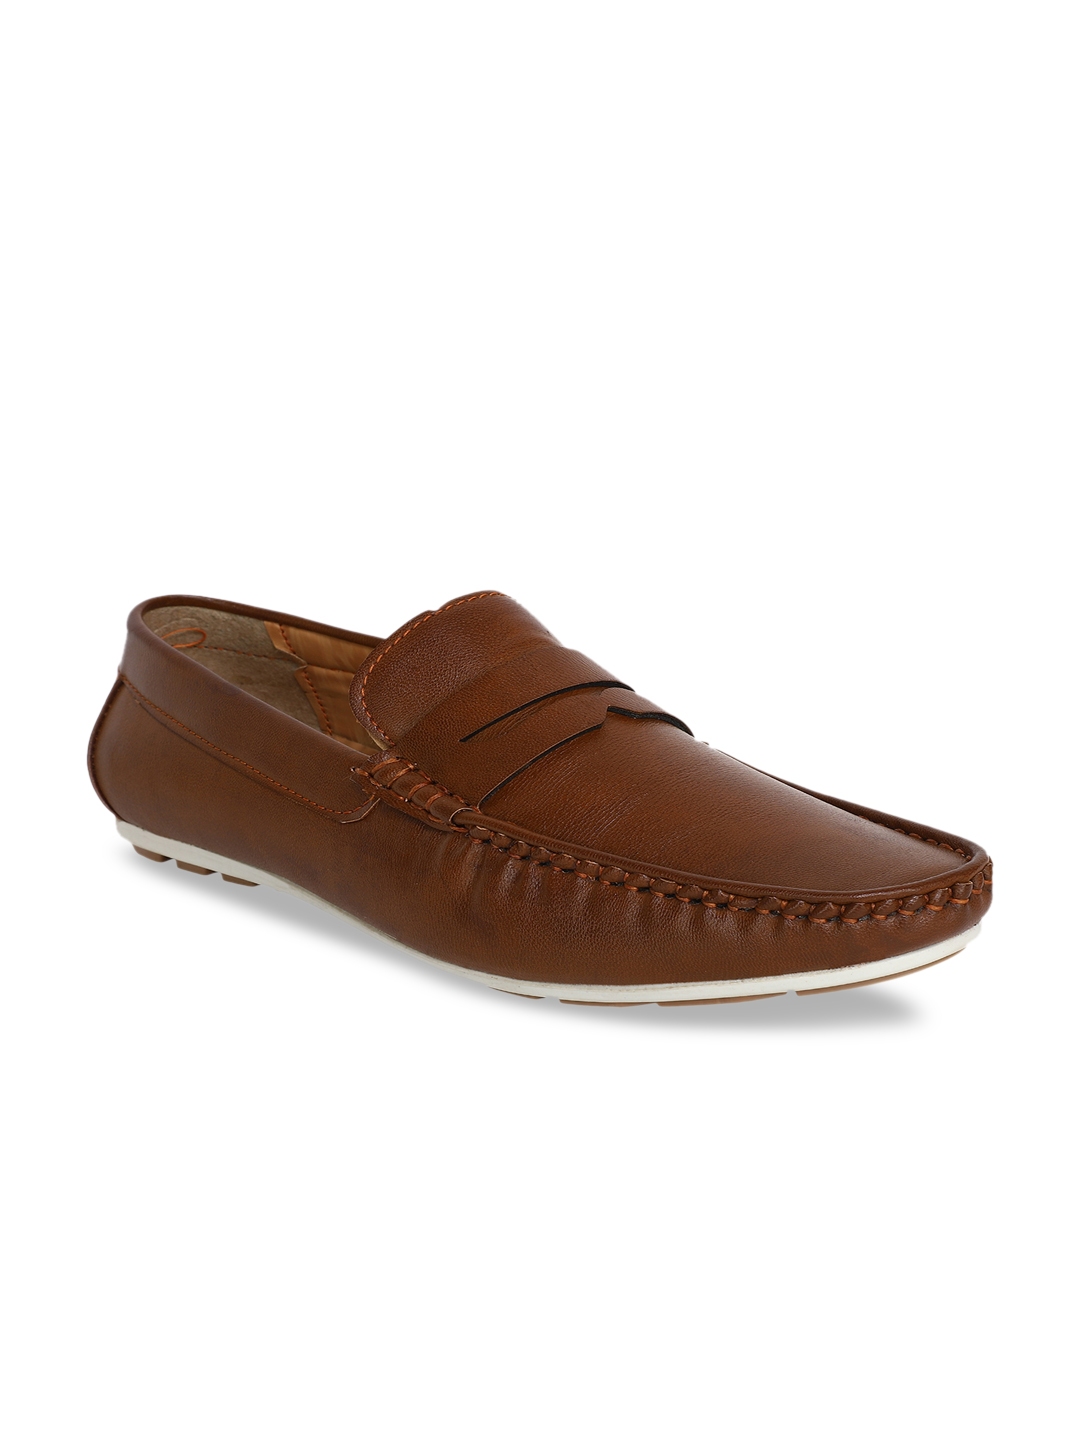 Buy Respiro Men Tan Brown Loafers - Casual Shoes for Men 11269830 | Myntra